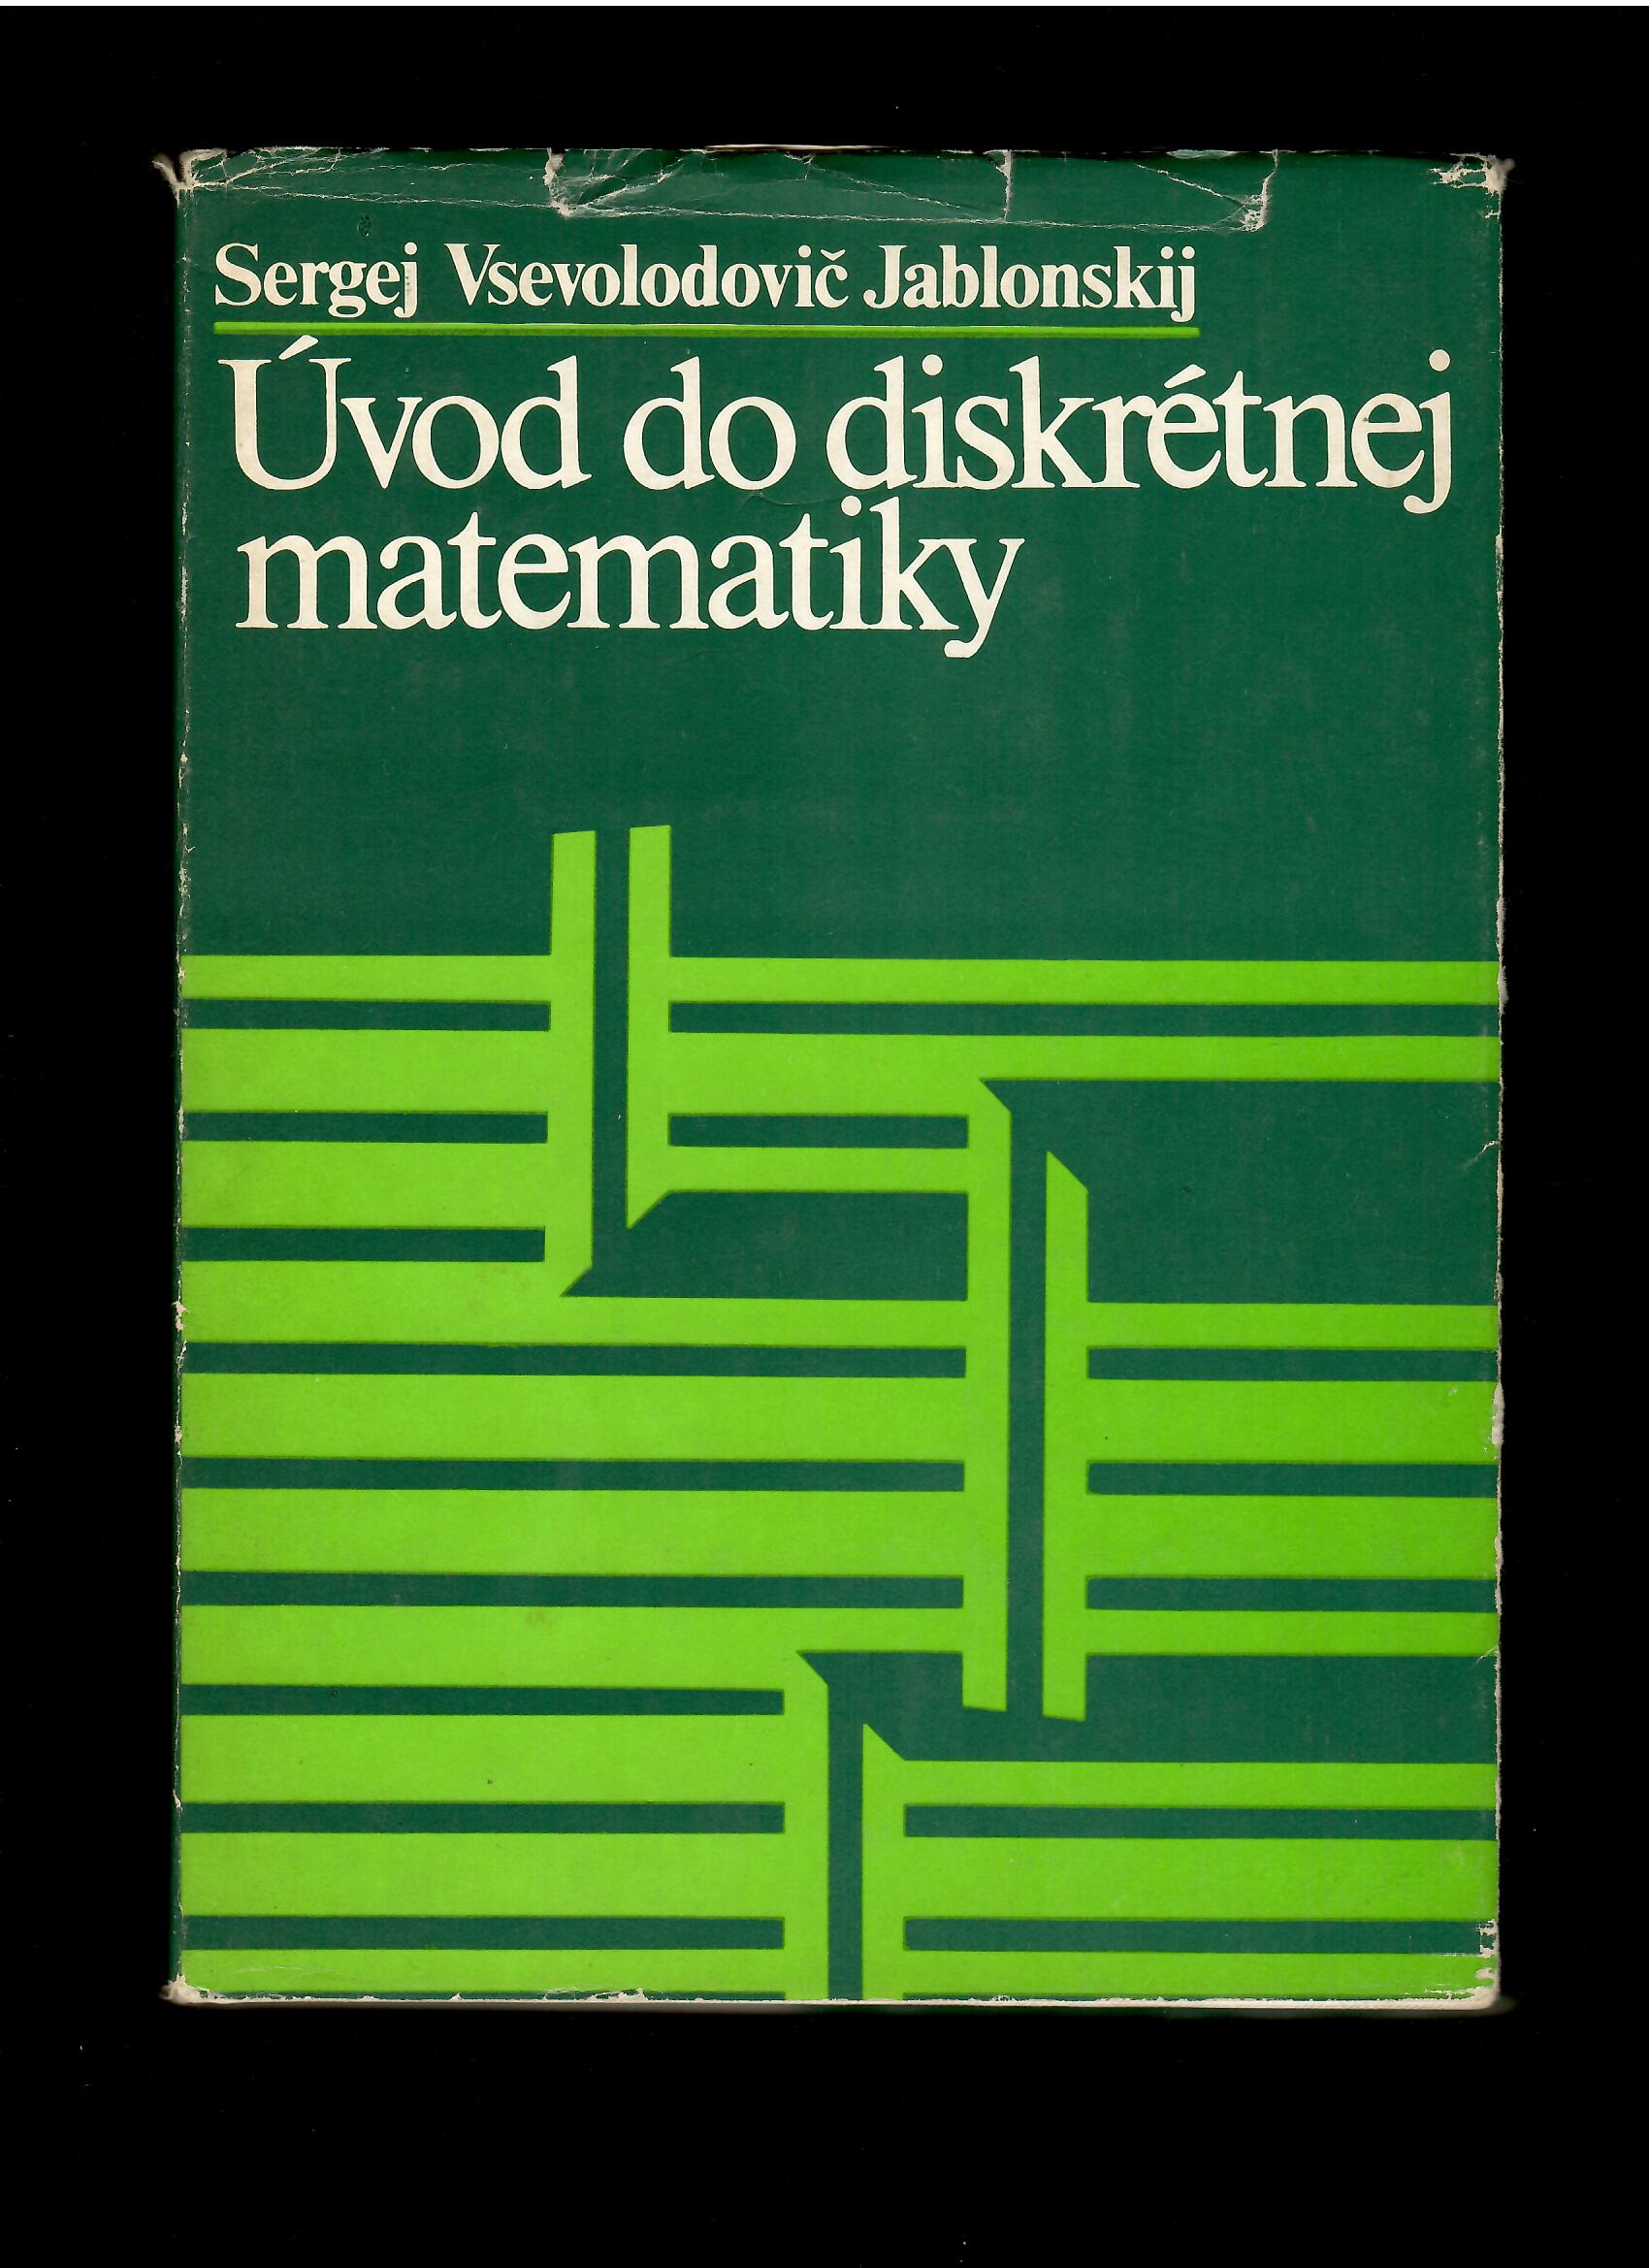 Sergej V. Jablonskij: Úvod do diskrétnej matematiky